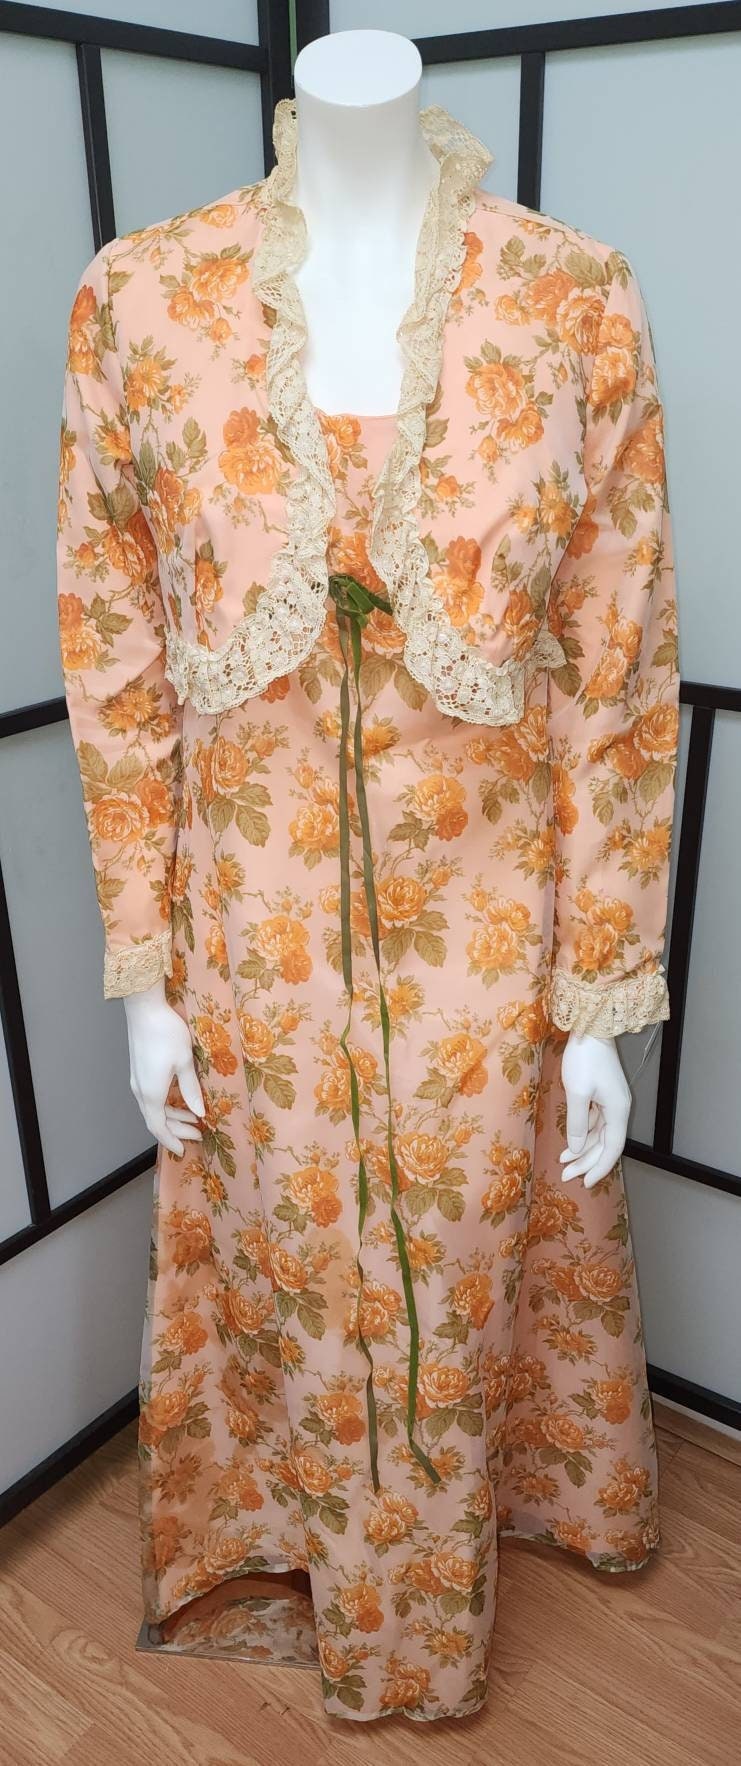 Vintage 1970s Dress with Jacket Long Orange Sherbet Floral Print Gown Matching Long Sleeve Bolero Jacket Prom Boho M